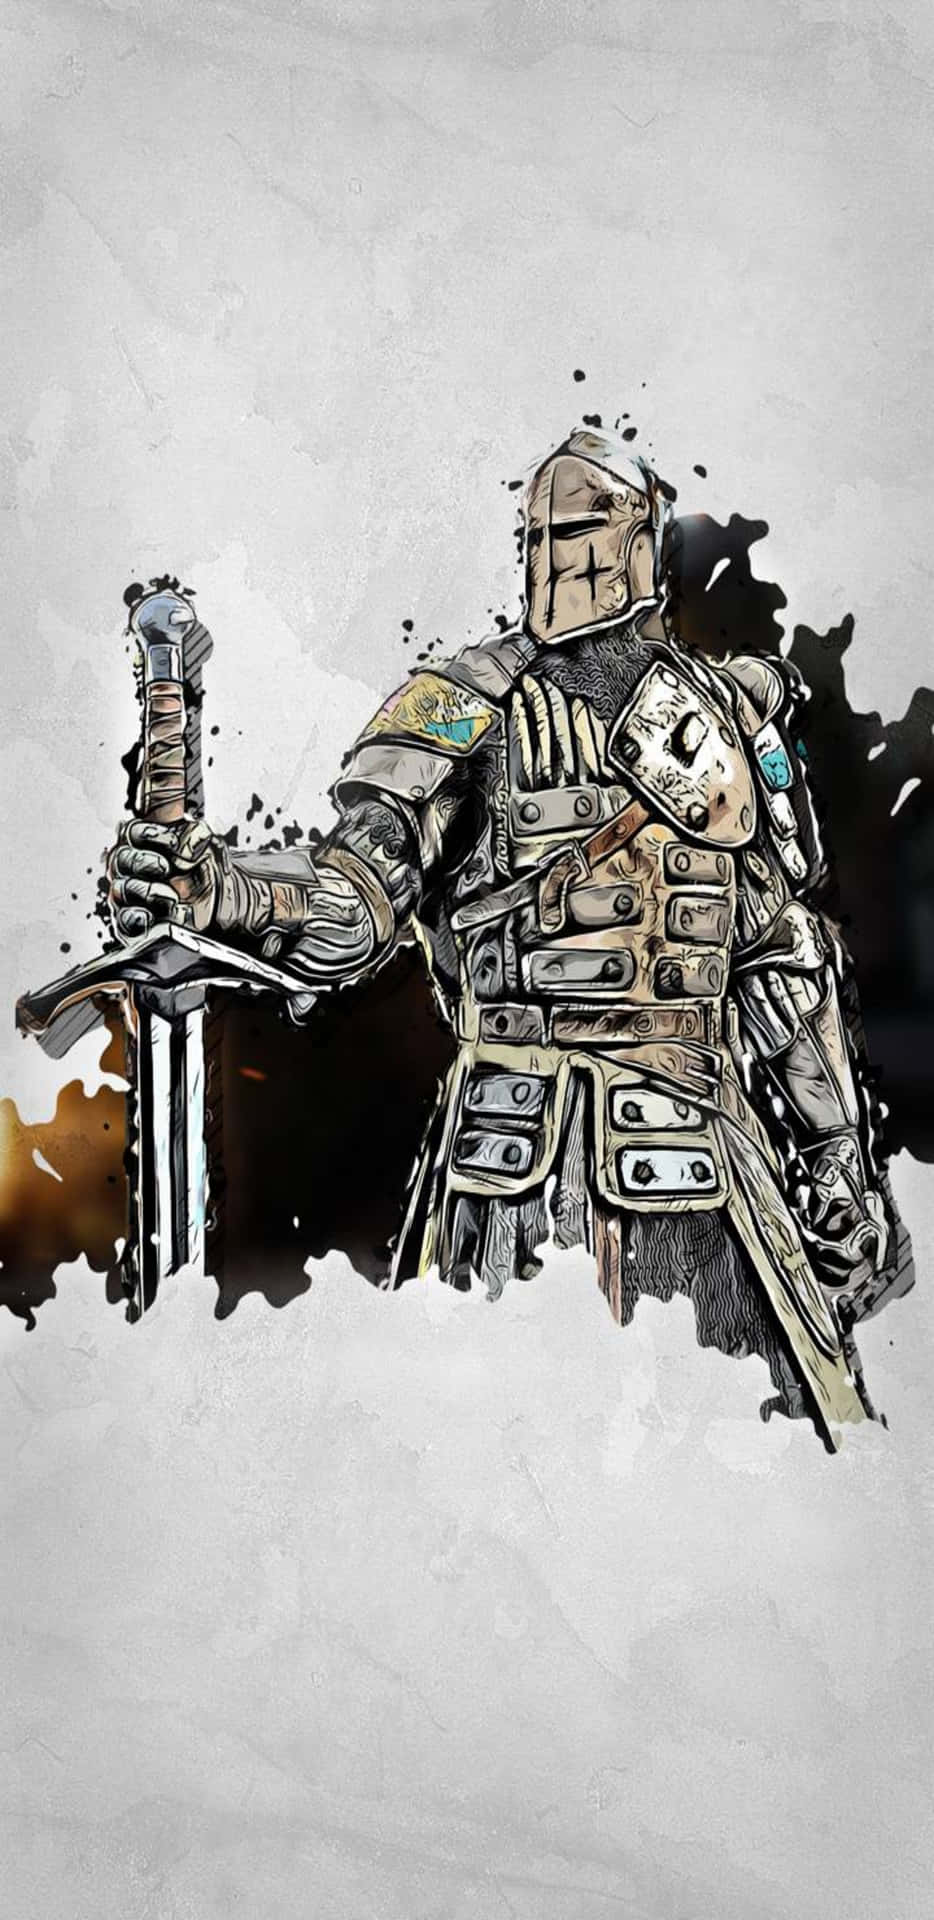 Pixel 3xl For Honor Warden Hero Background